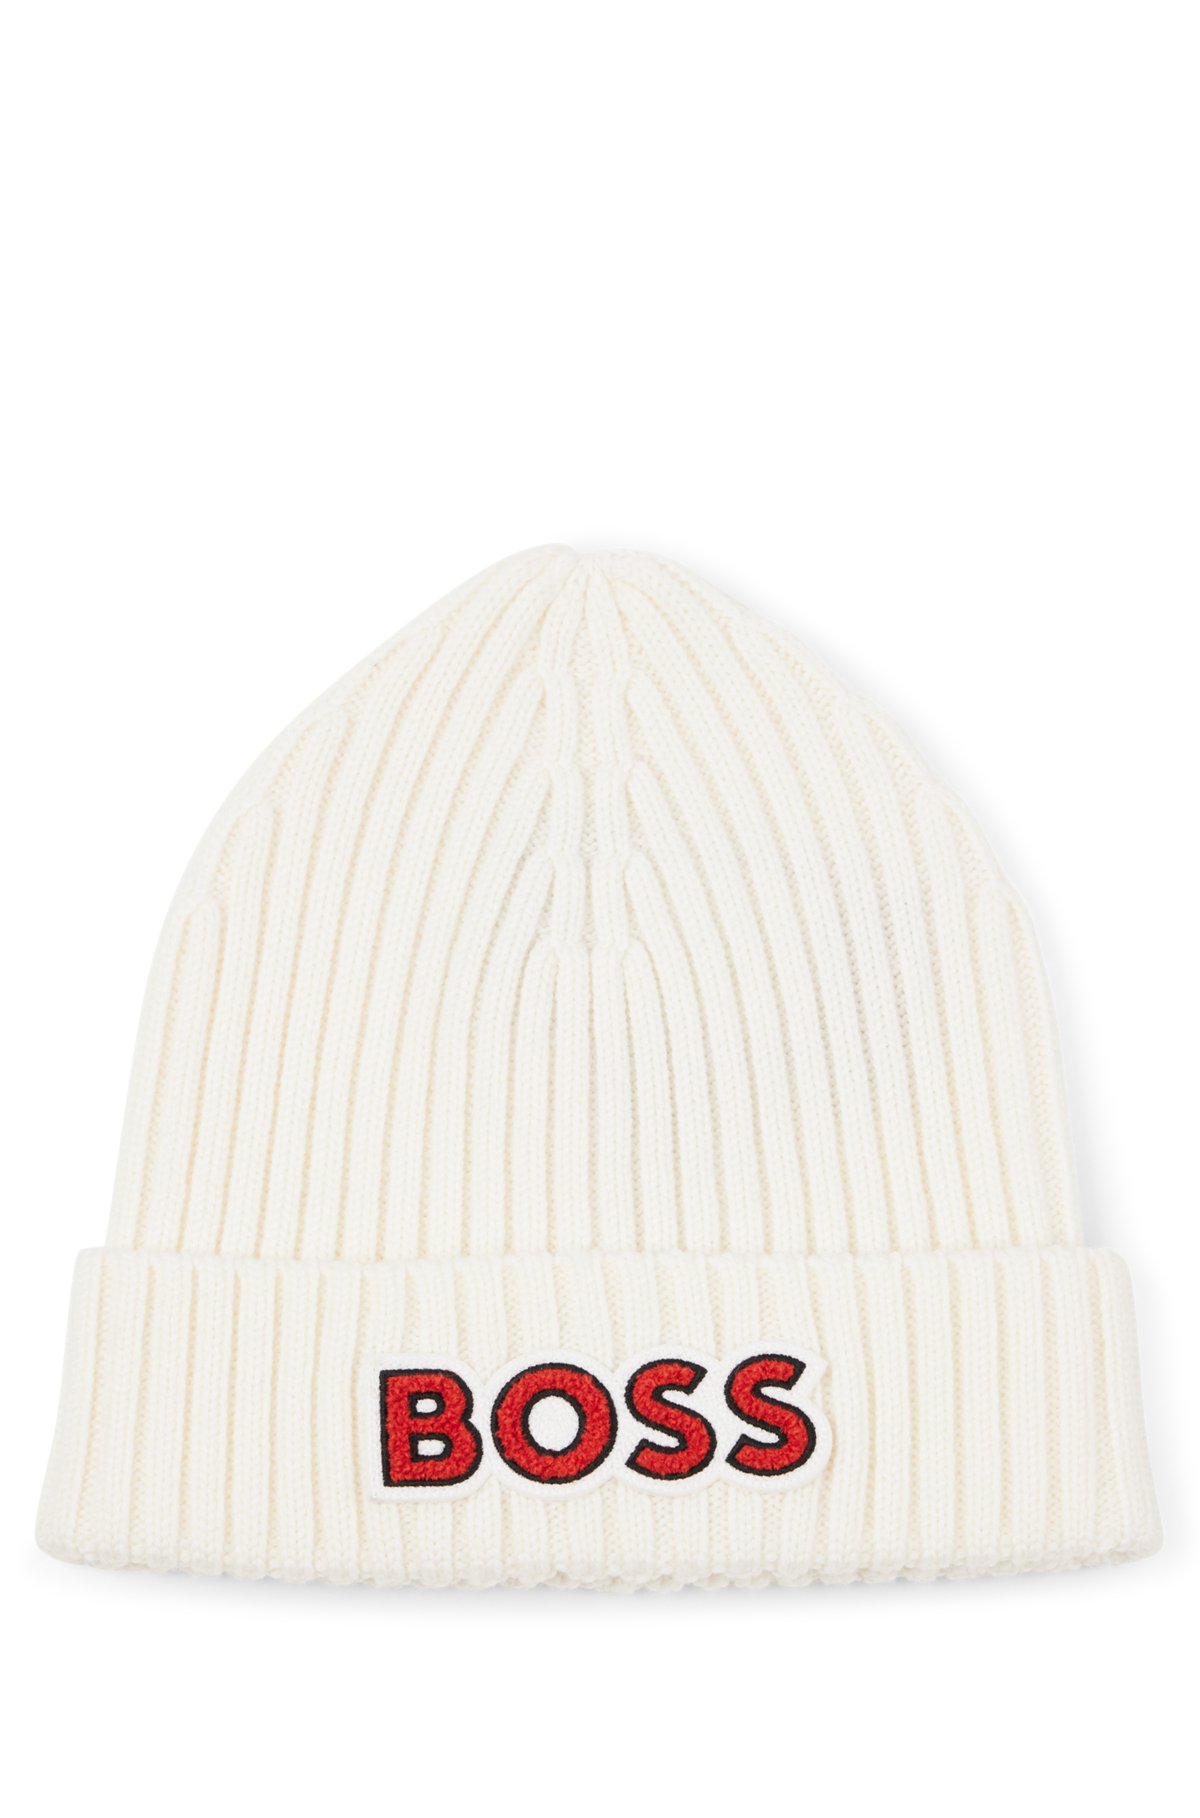 Hugo Boss Hats  Baseball Caps & Beanies